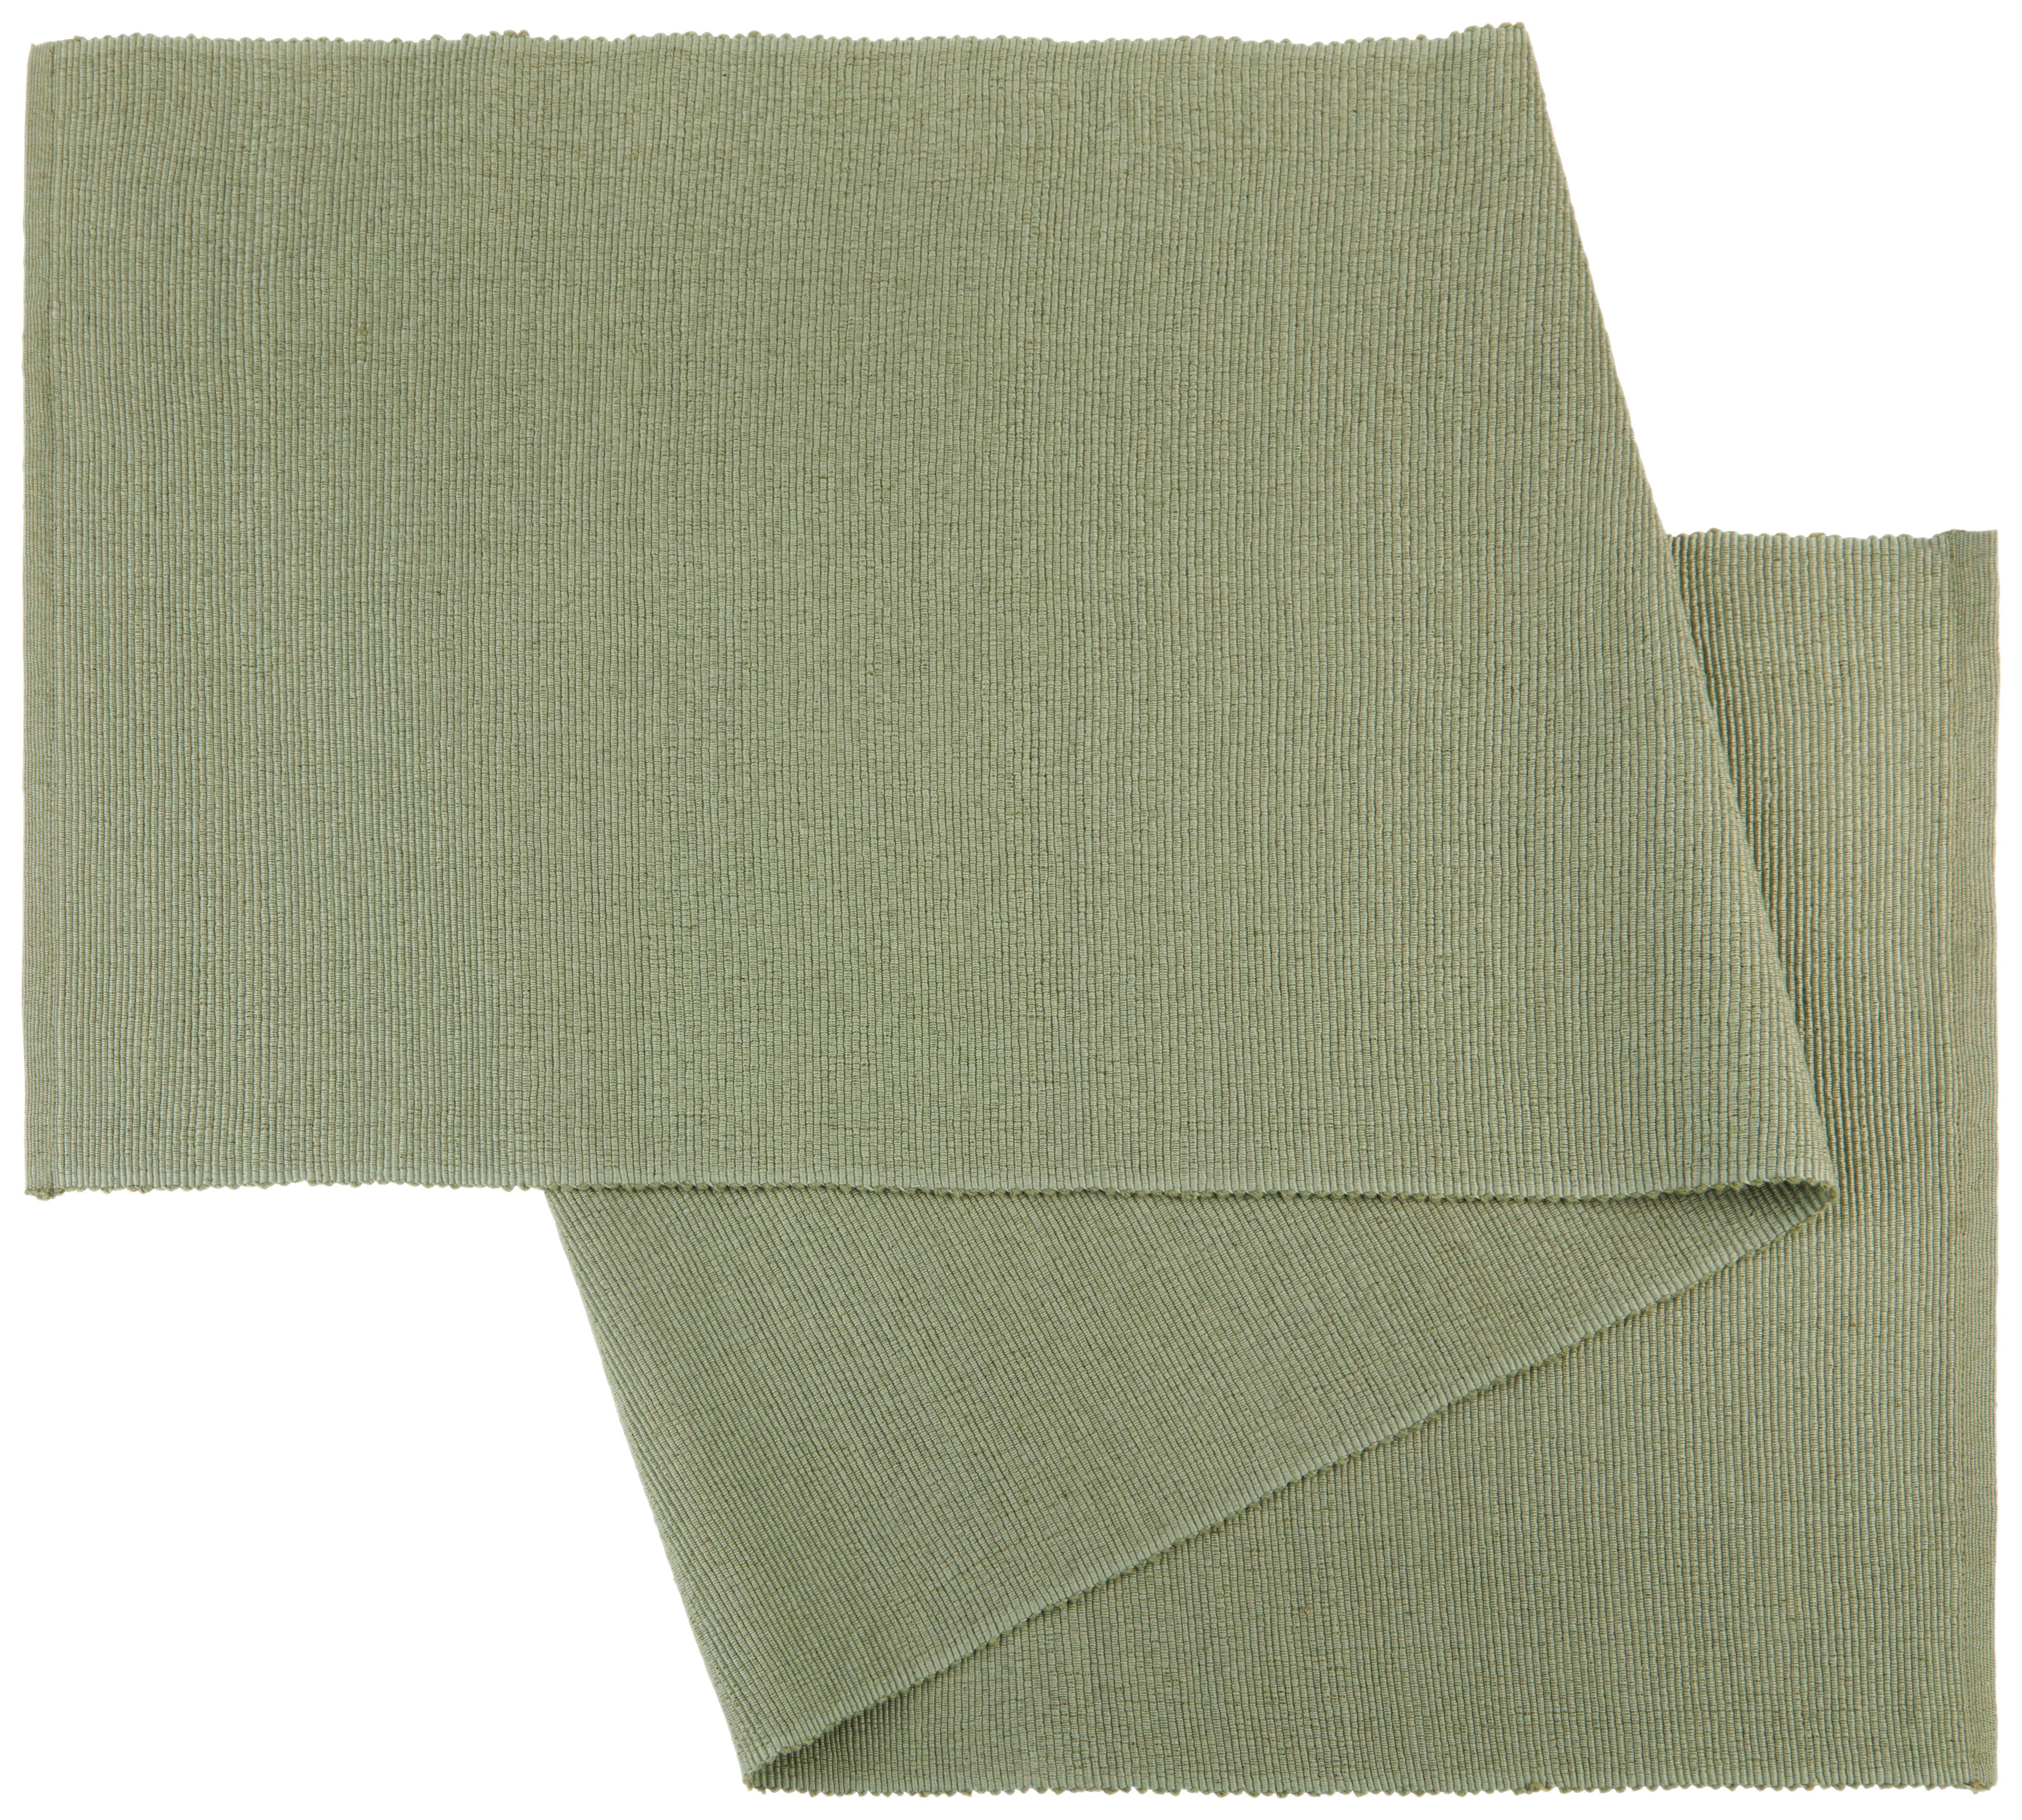 Nadprt Maren - žajbljevo zelena, tekstil (40/150cm) - Modern Living